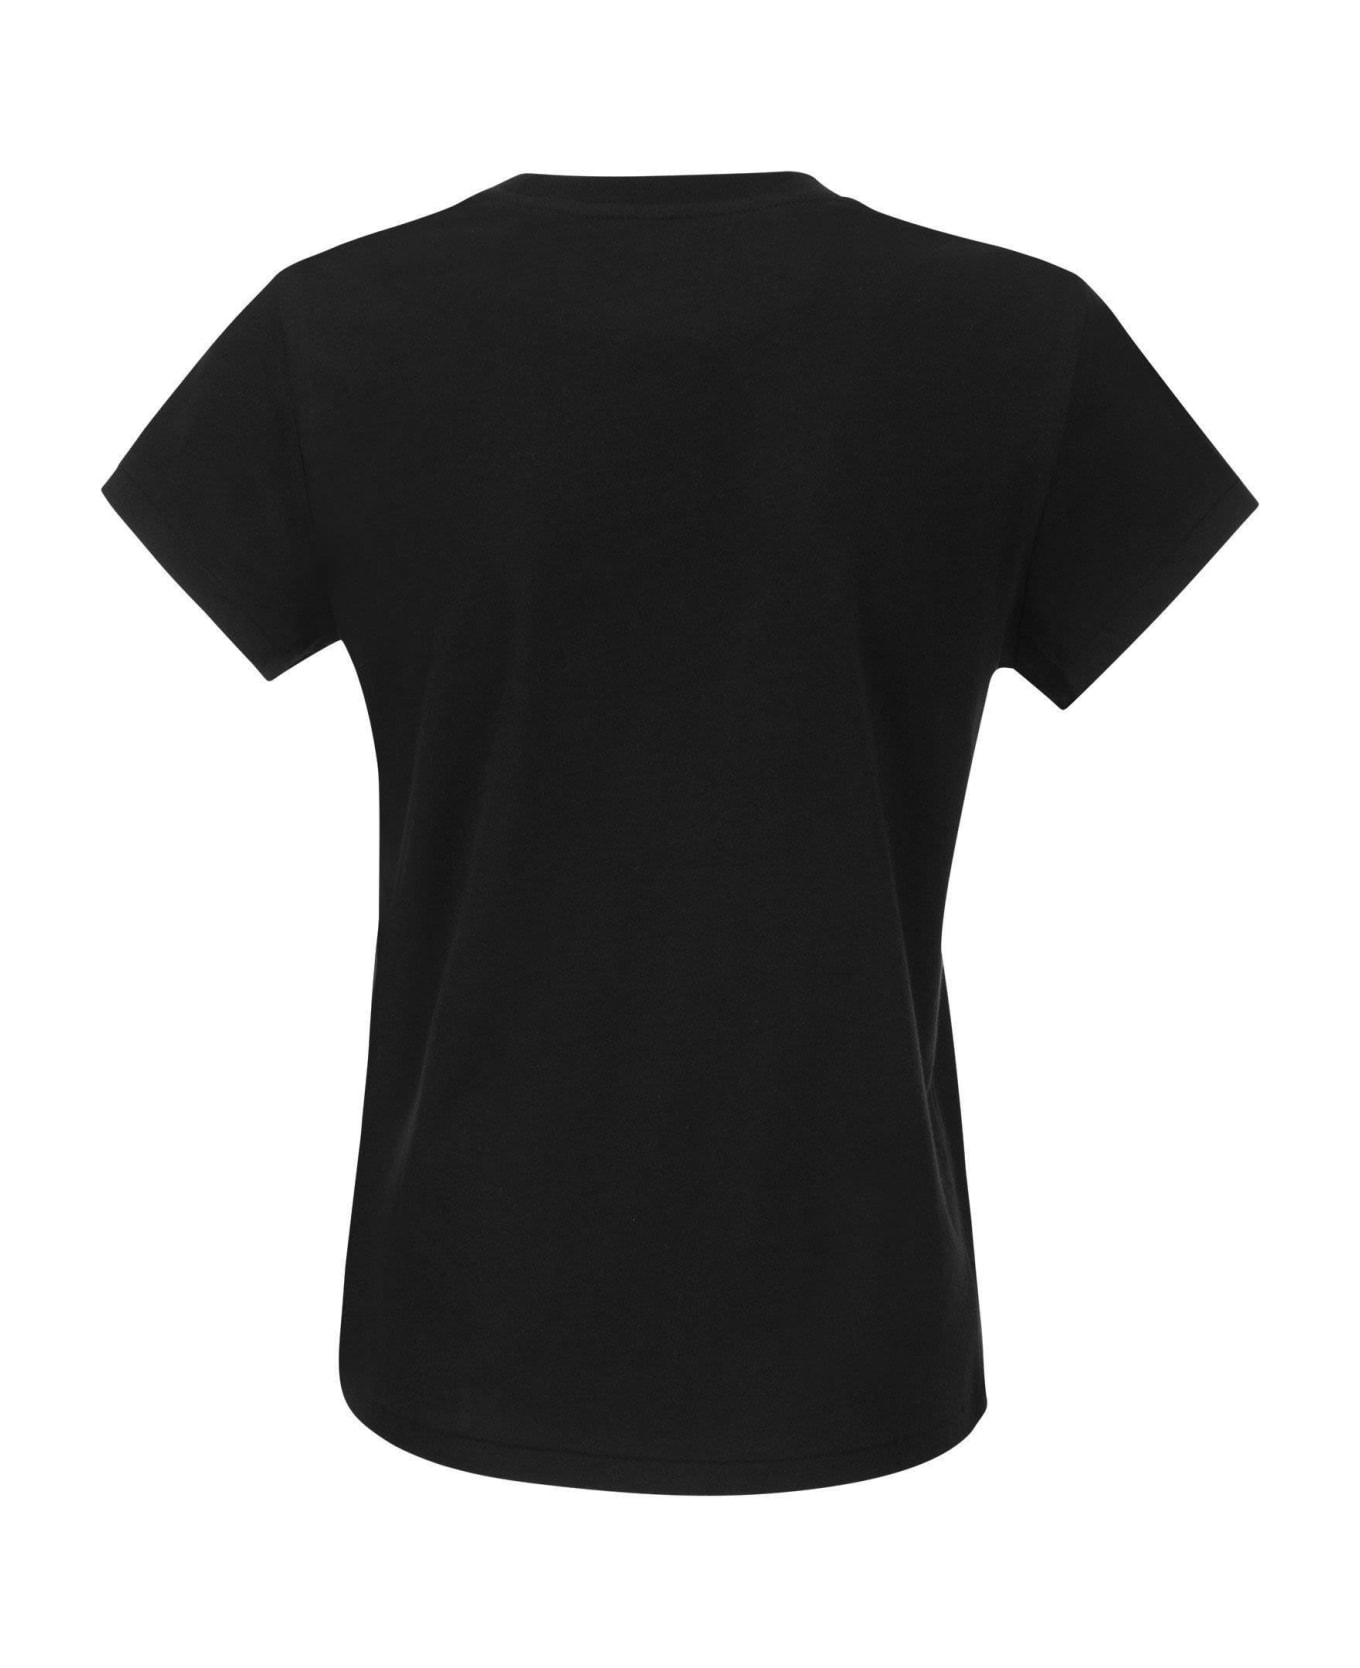 Polo Ralph Lauren Pony T-shirt - Black